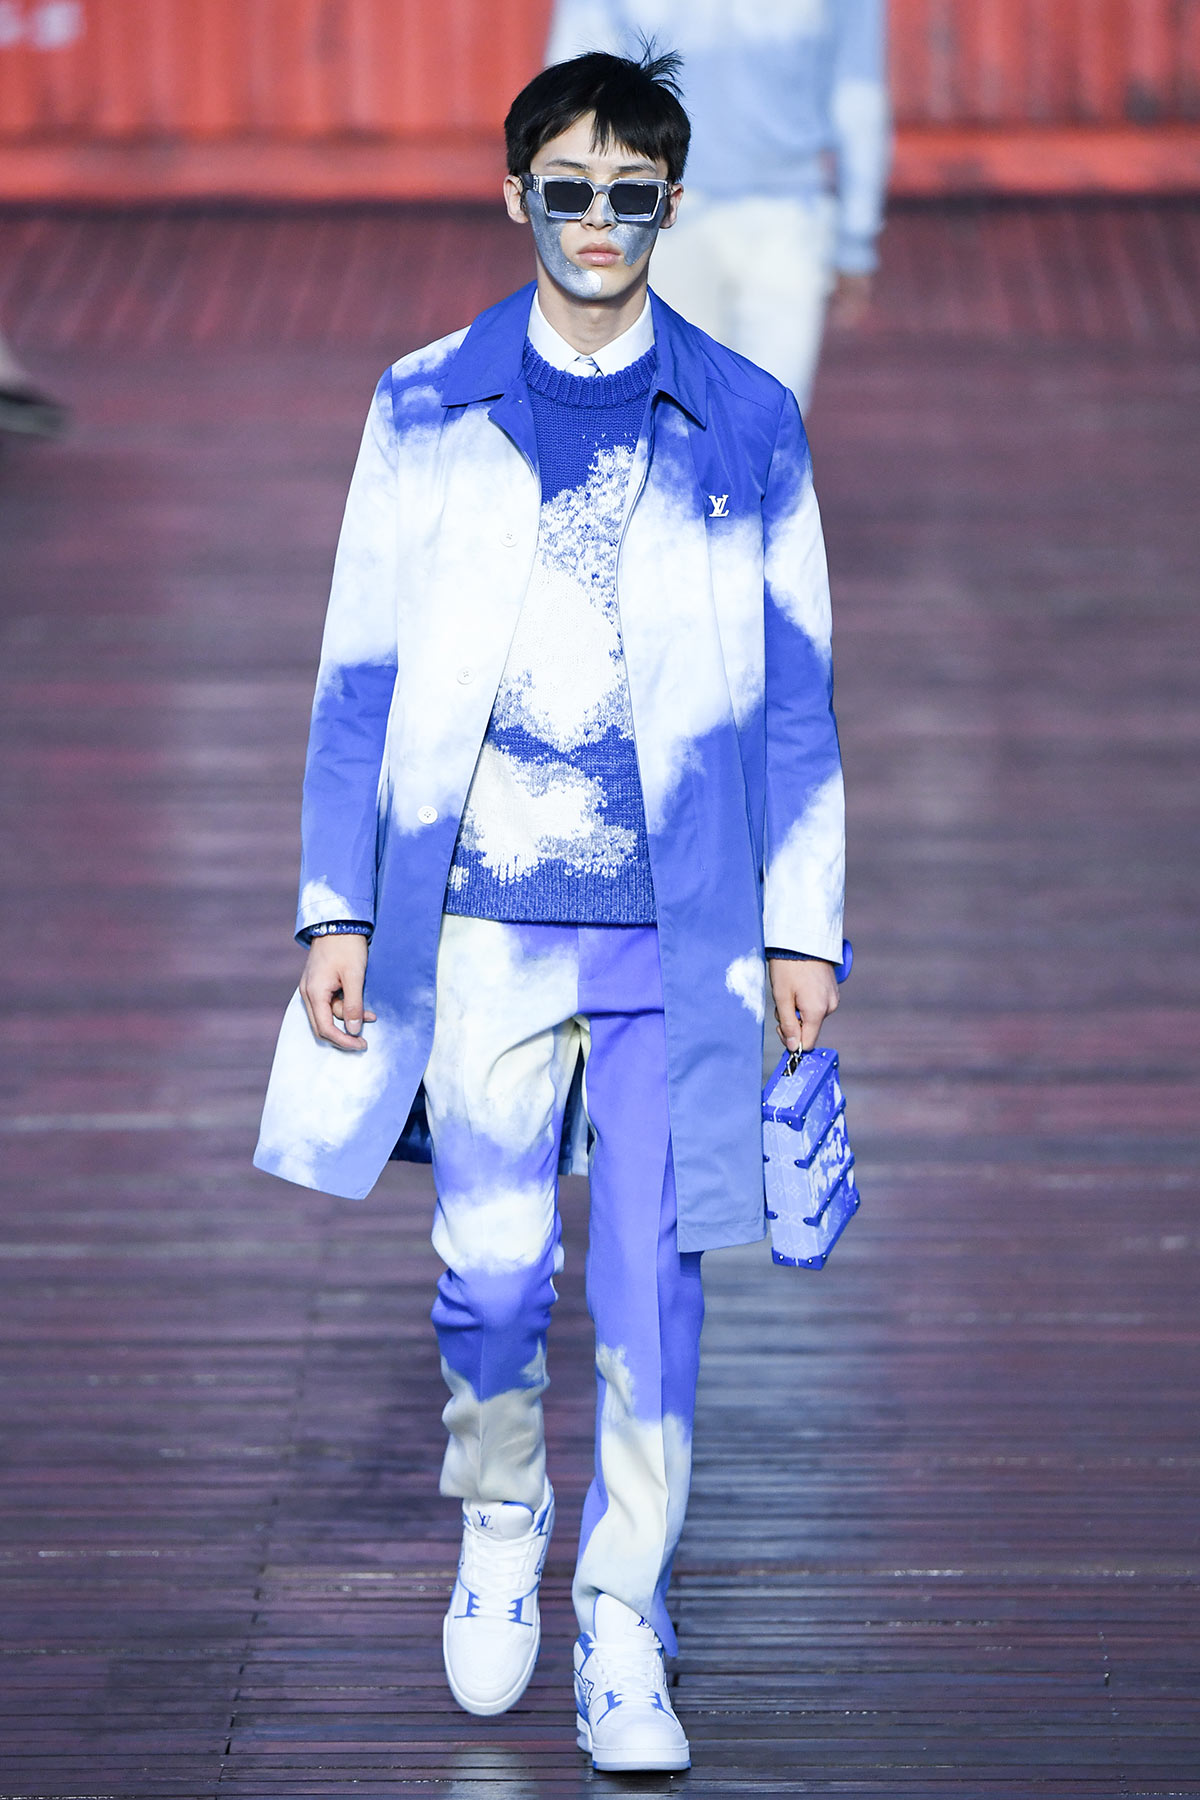 Louis Vuitton Spring Summer 2021 Men Fashion Show